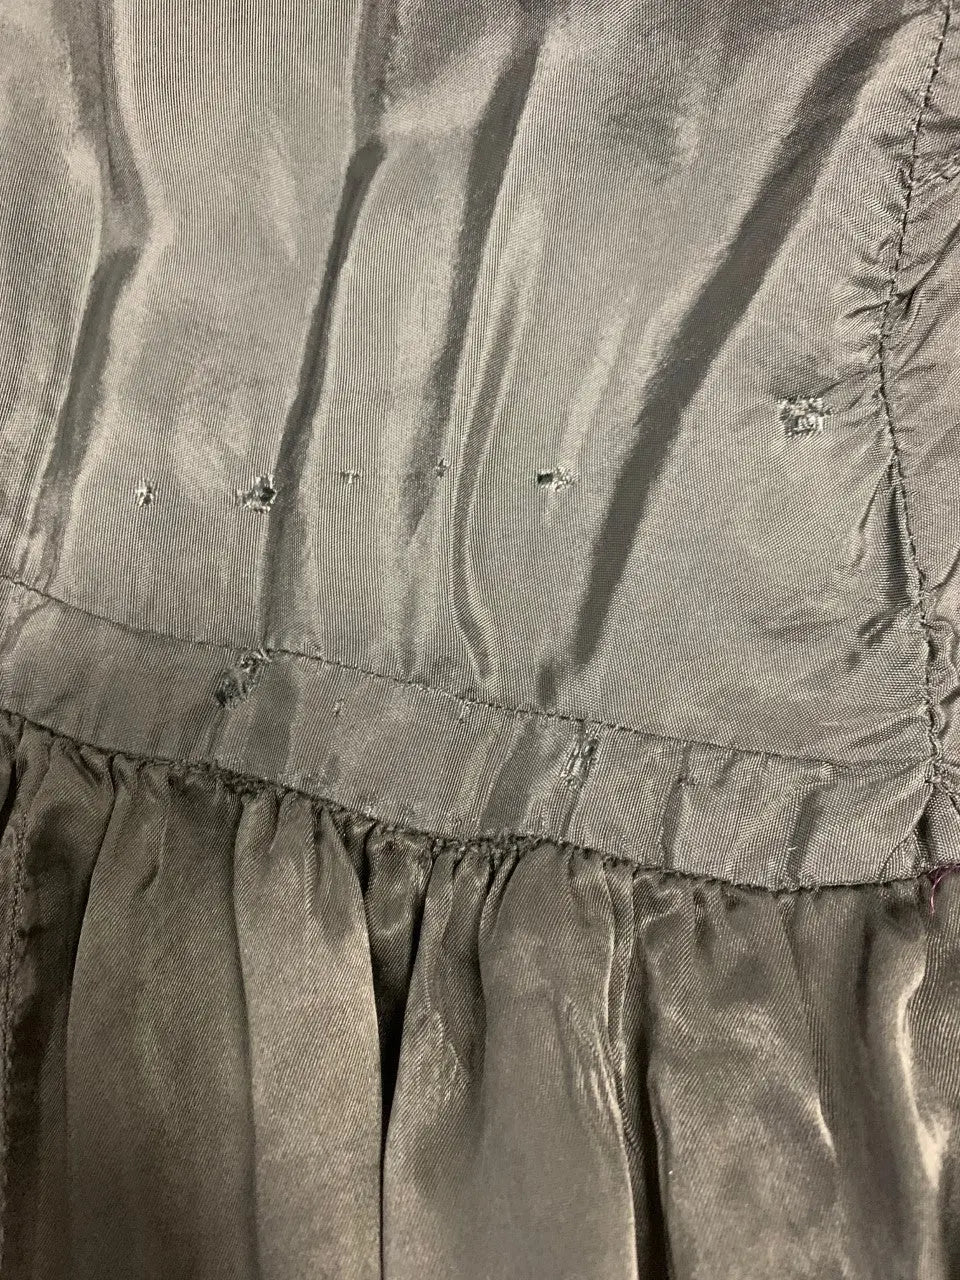 Handmade - Handmade Long Satin Ruffle Skirt- ThriftTale.com - Vintage and second handclothing